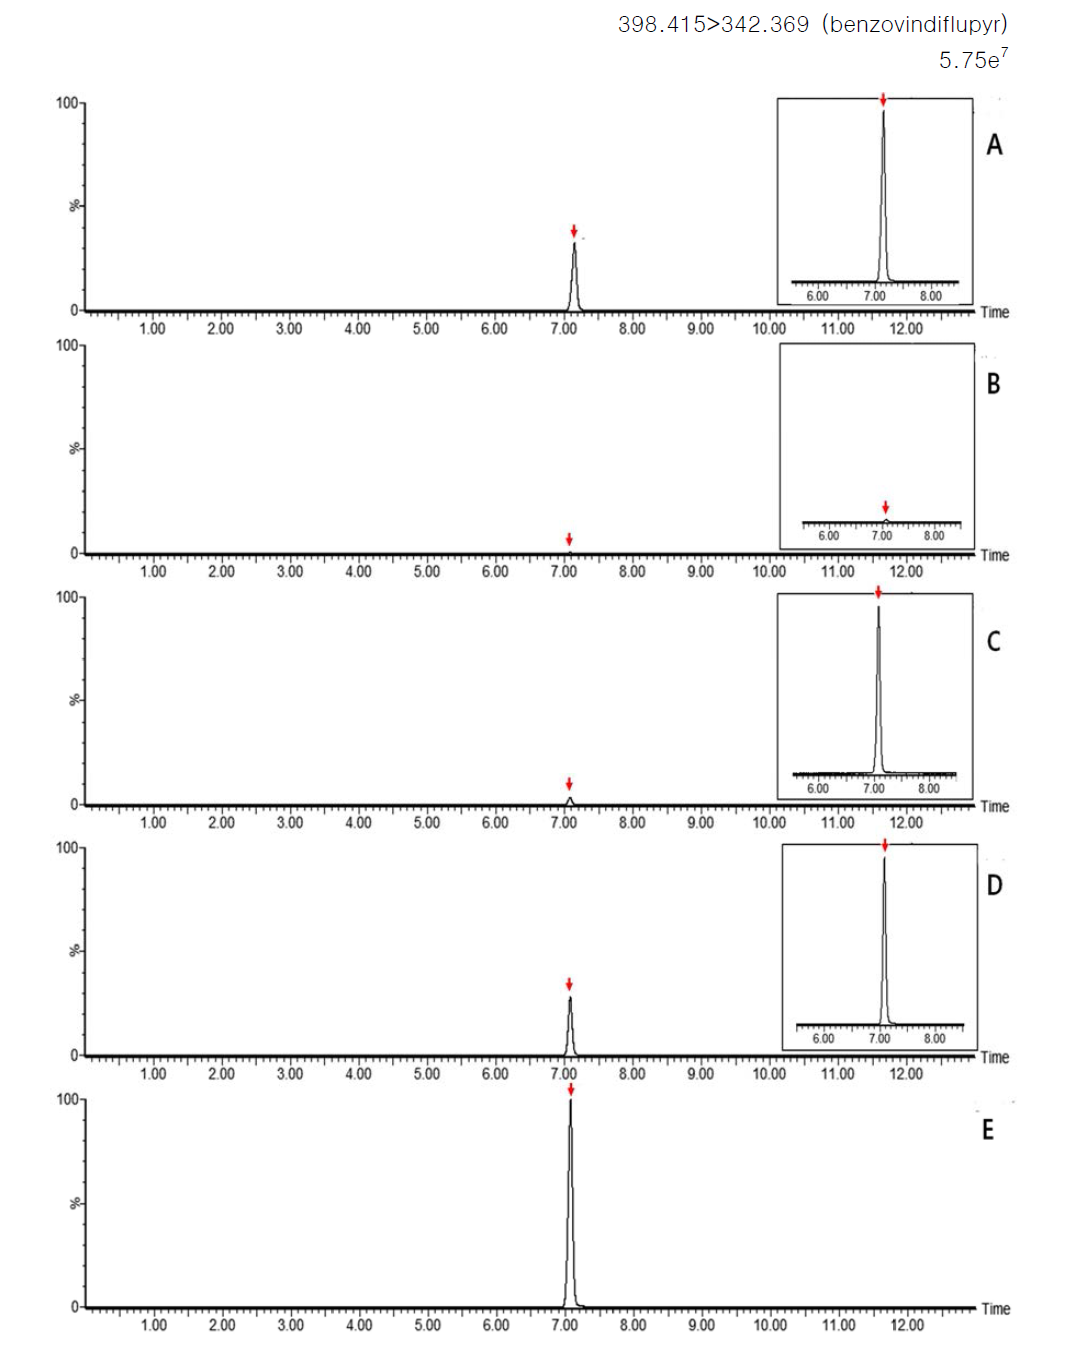 Representative MRM(quantification ion) chromatograms of benzovindiflupyr corresponding to: (A) standard solution at 0.05 mg/kg, (B) soybean control, (C) spiked at 0.005 mg/kg, (D) spiked at 0.05 mg/kg and (E) spiked at 0.25 mg/kg